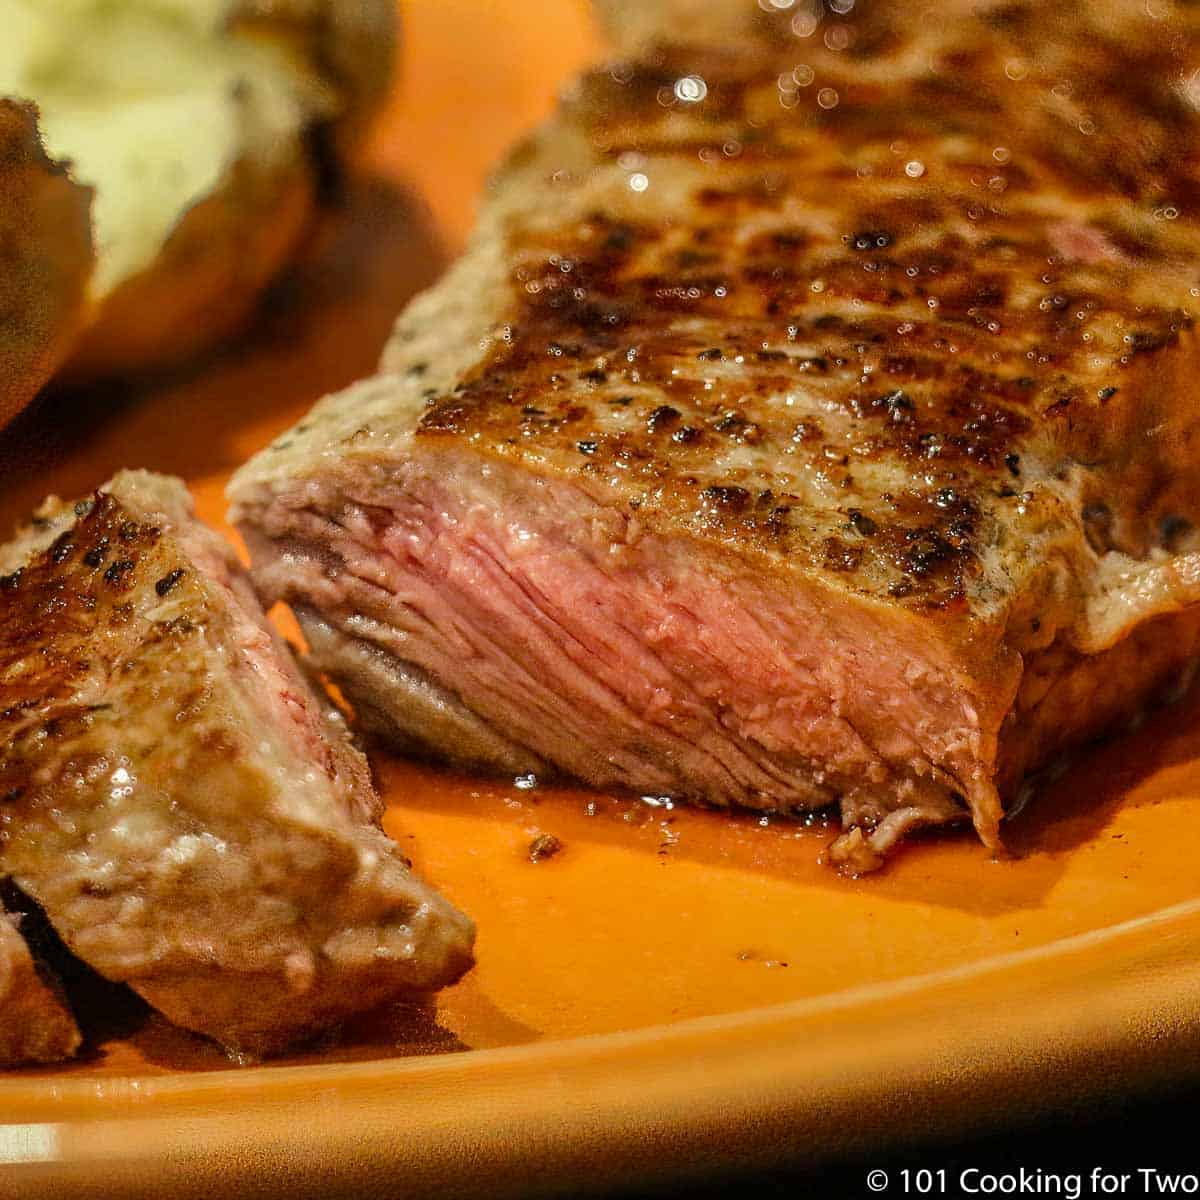 NY strip steak cut on an orange plate